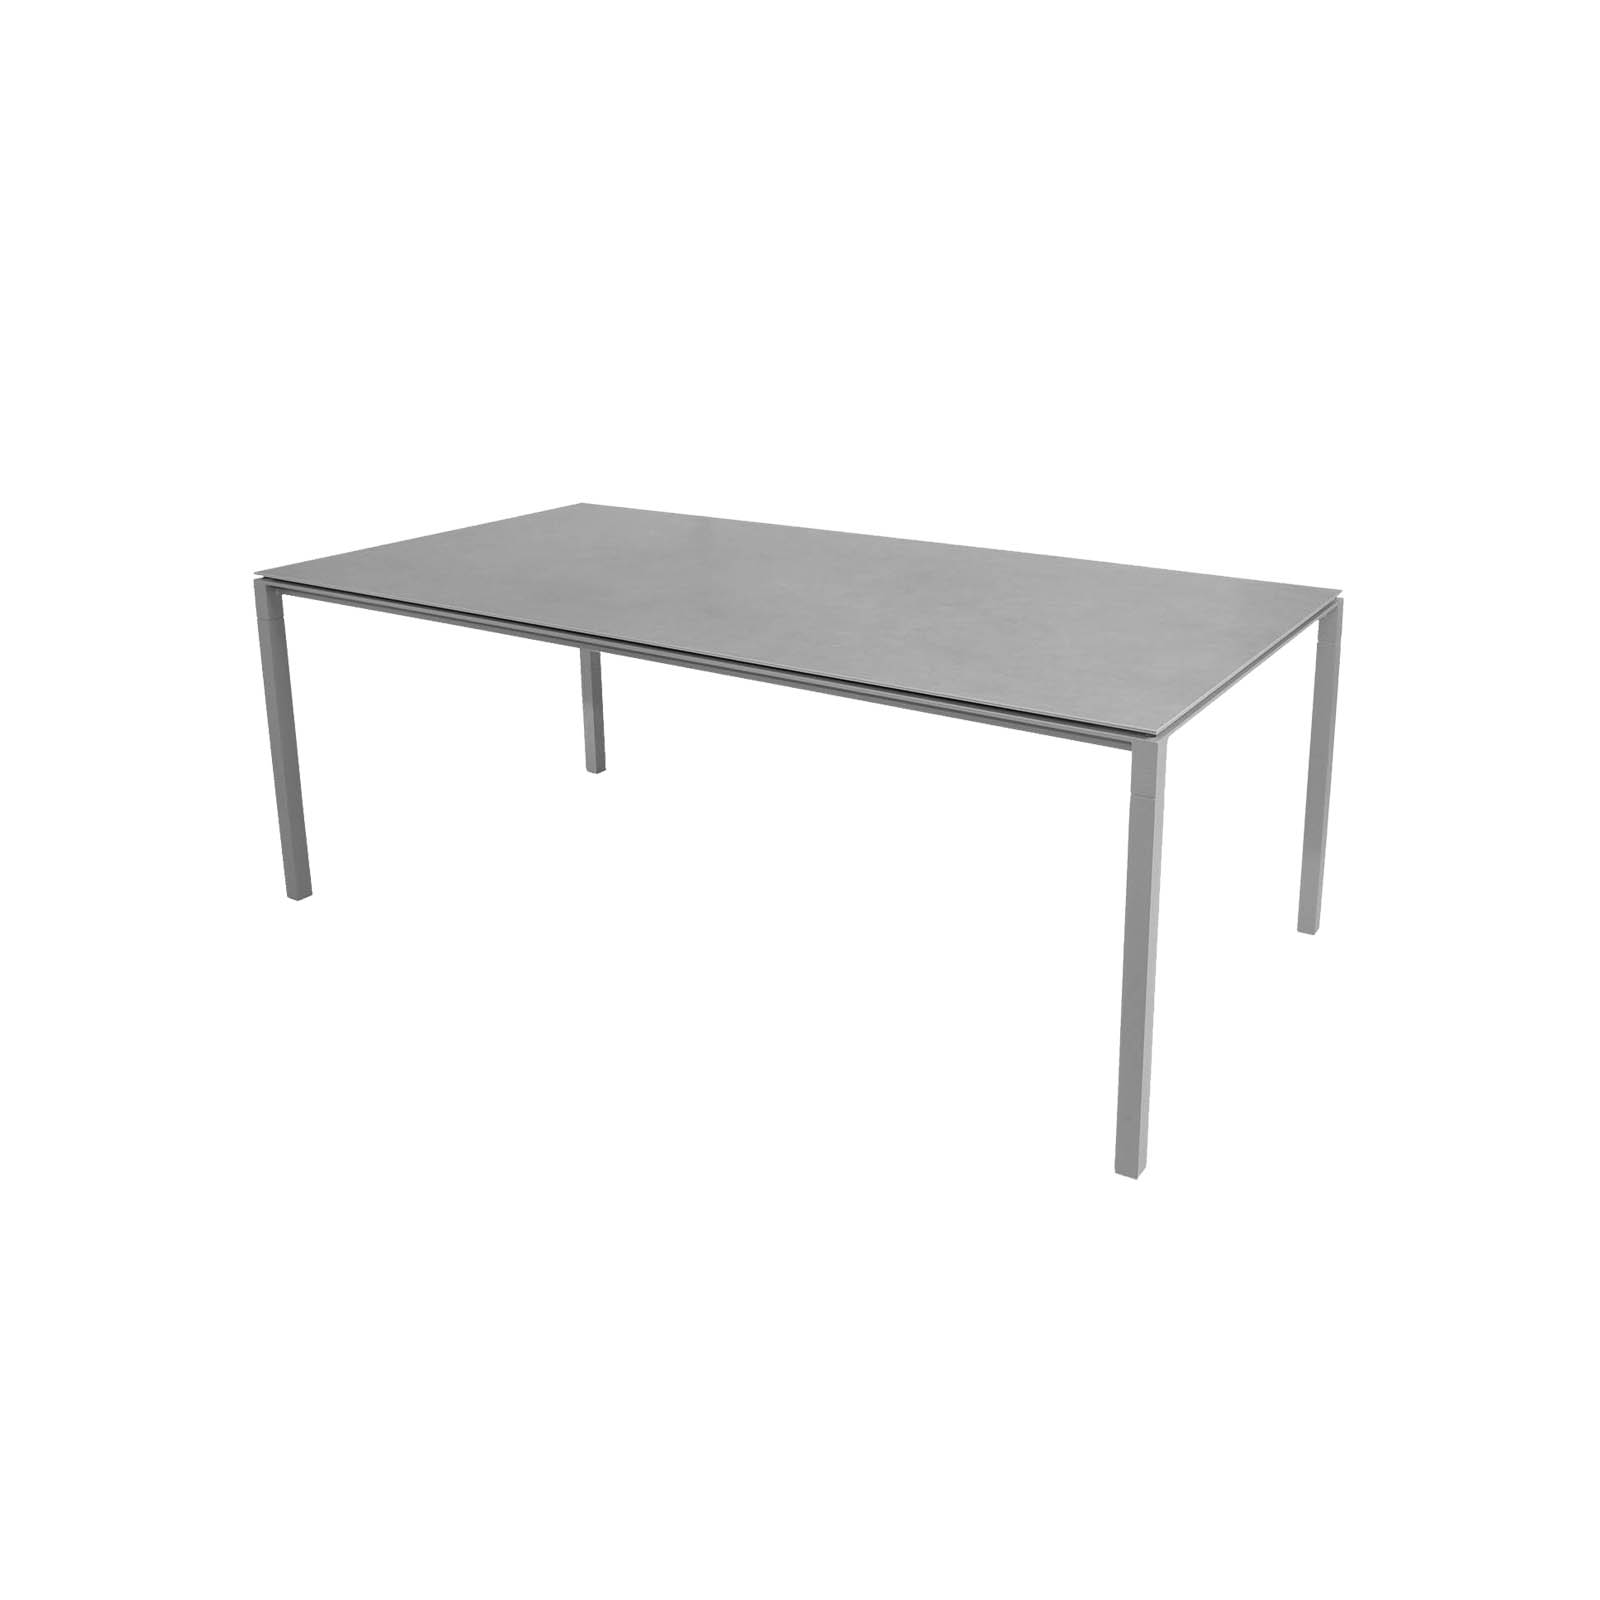 Tisch 200x100 cm Pure aus Aluminium in Light Grey mit Tischplatte aus Ceramic in Concrete Grey